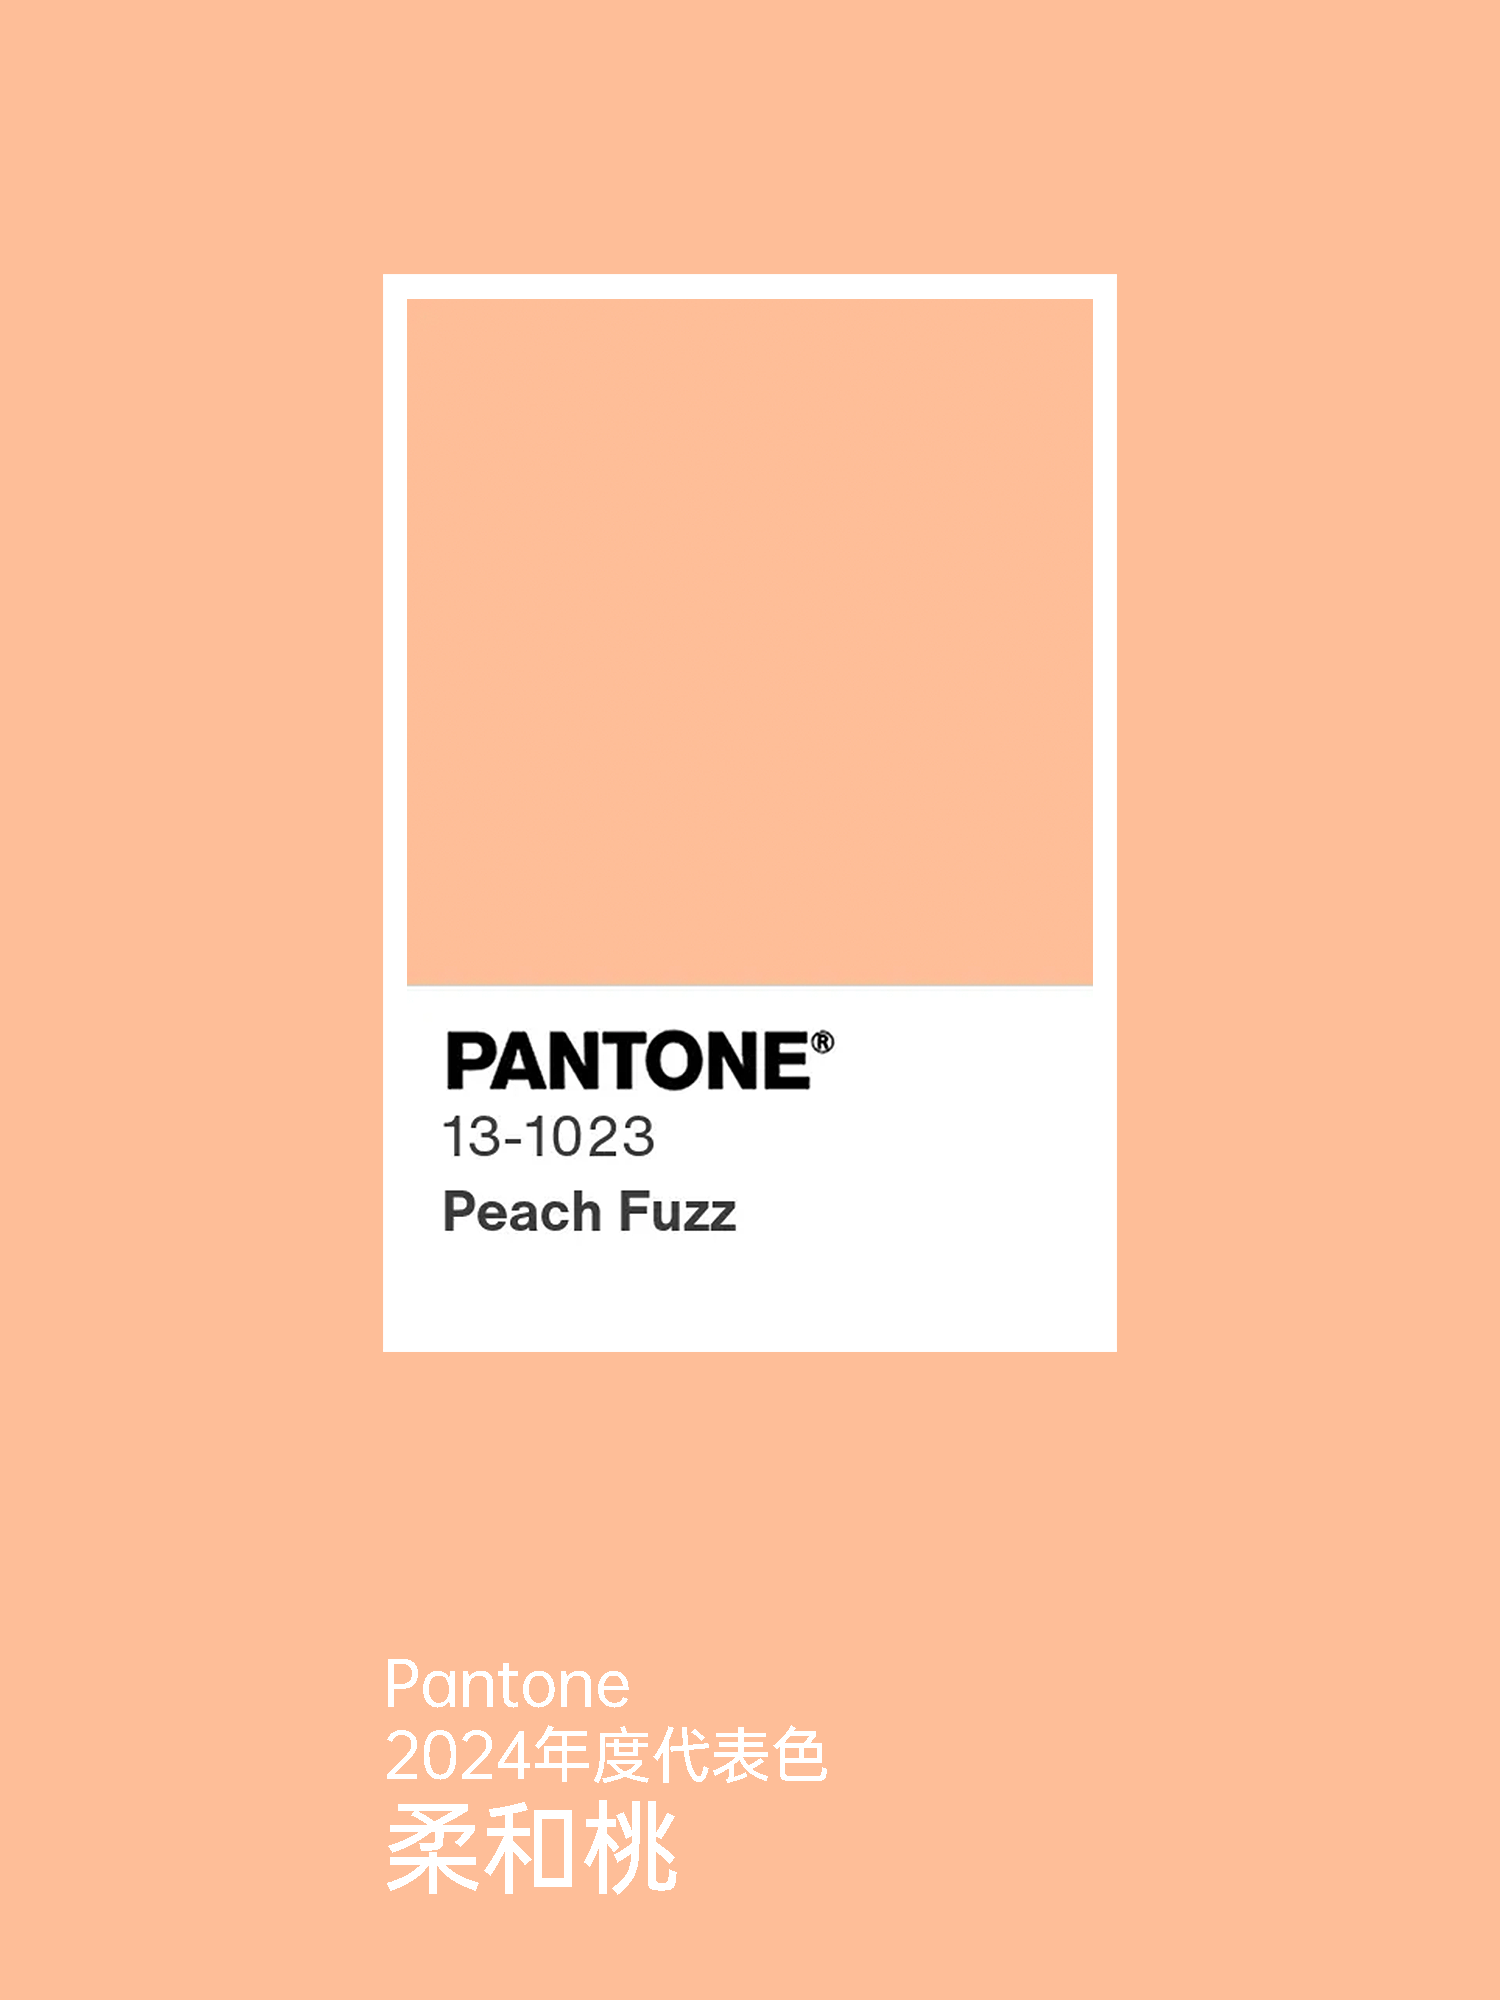 PANTONE 2024 年度代表色柔和桃